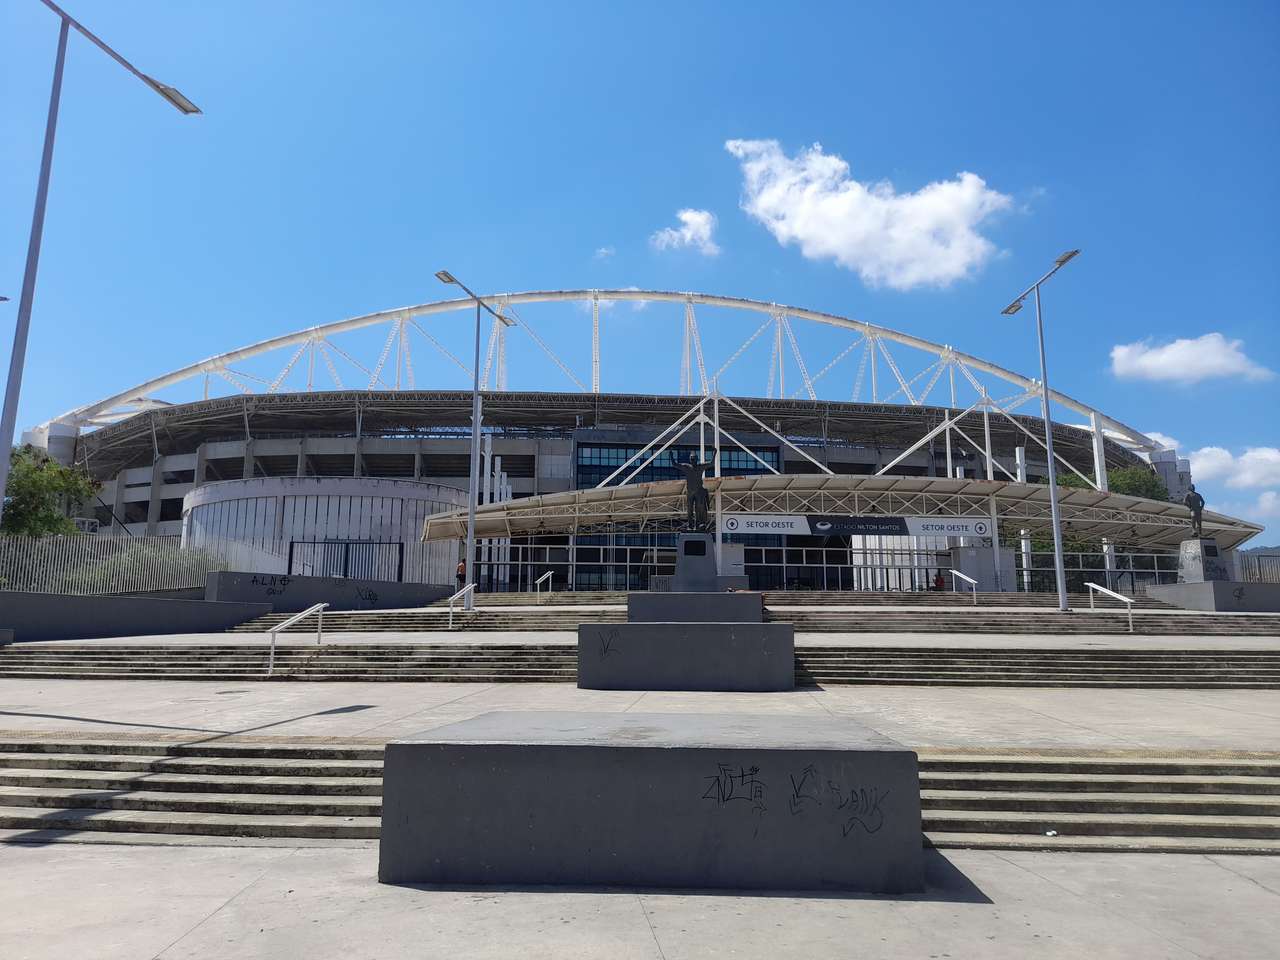 Główny dostęp do stadionu Botafogo w Rio de Janeiro puzzle online